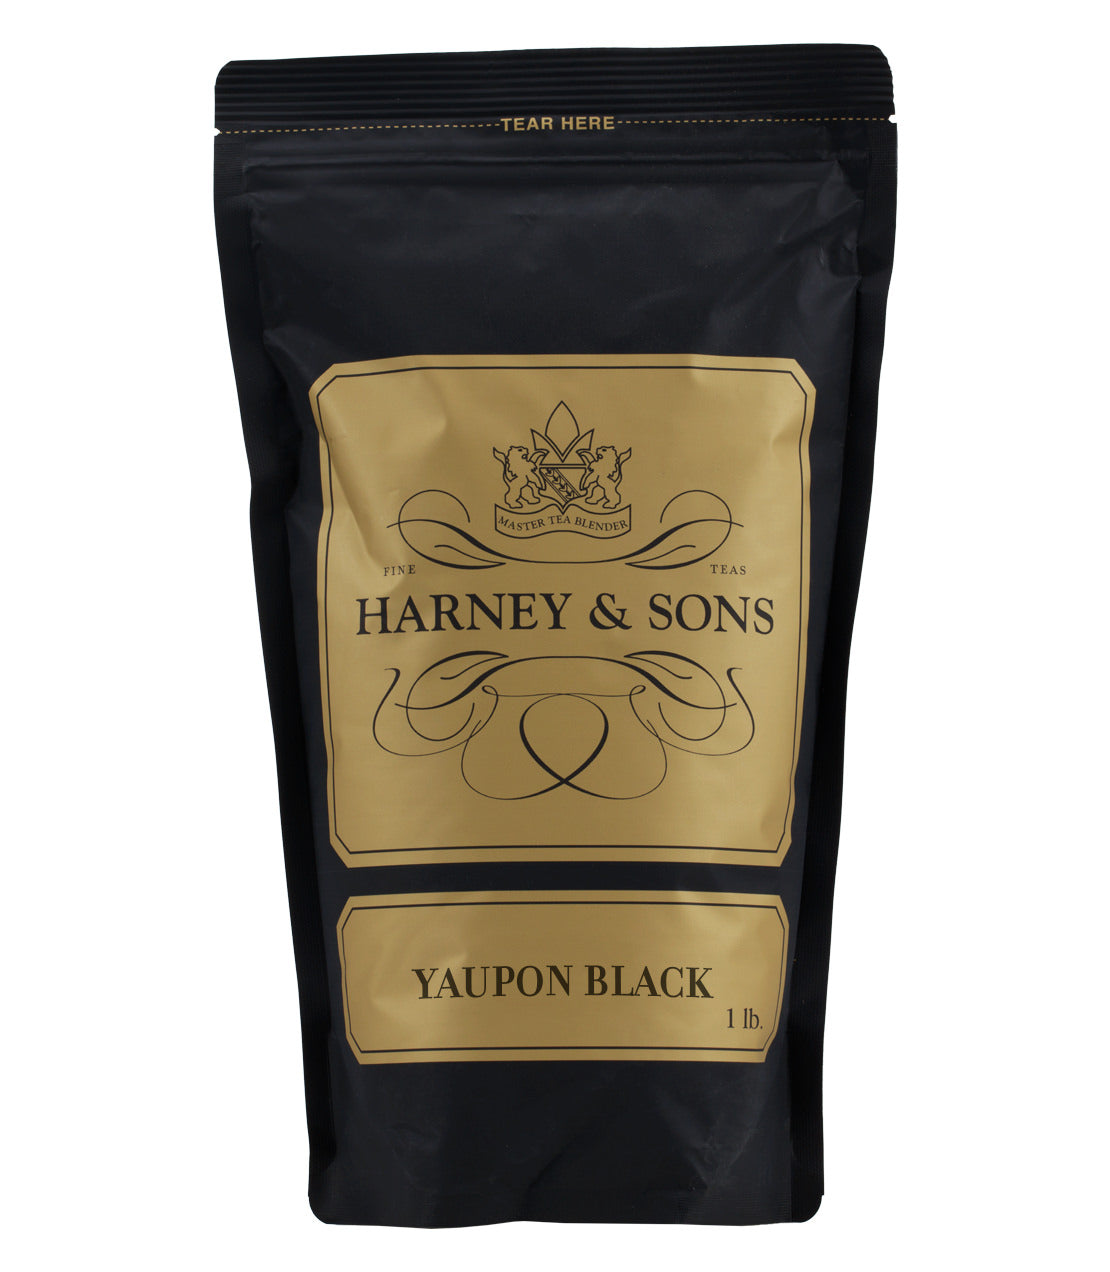 Yaupon Black - Loose 1 lb. Bag - Harney & Sons Fine Teas